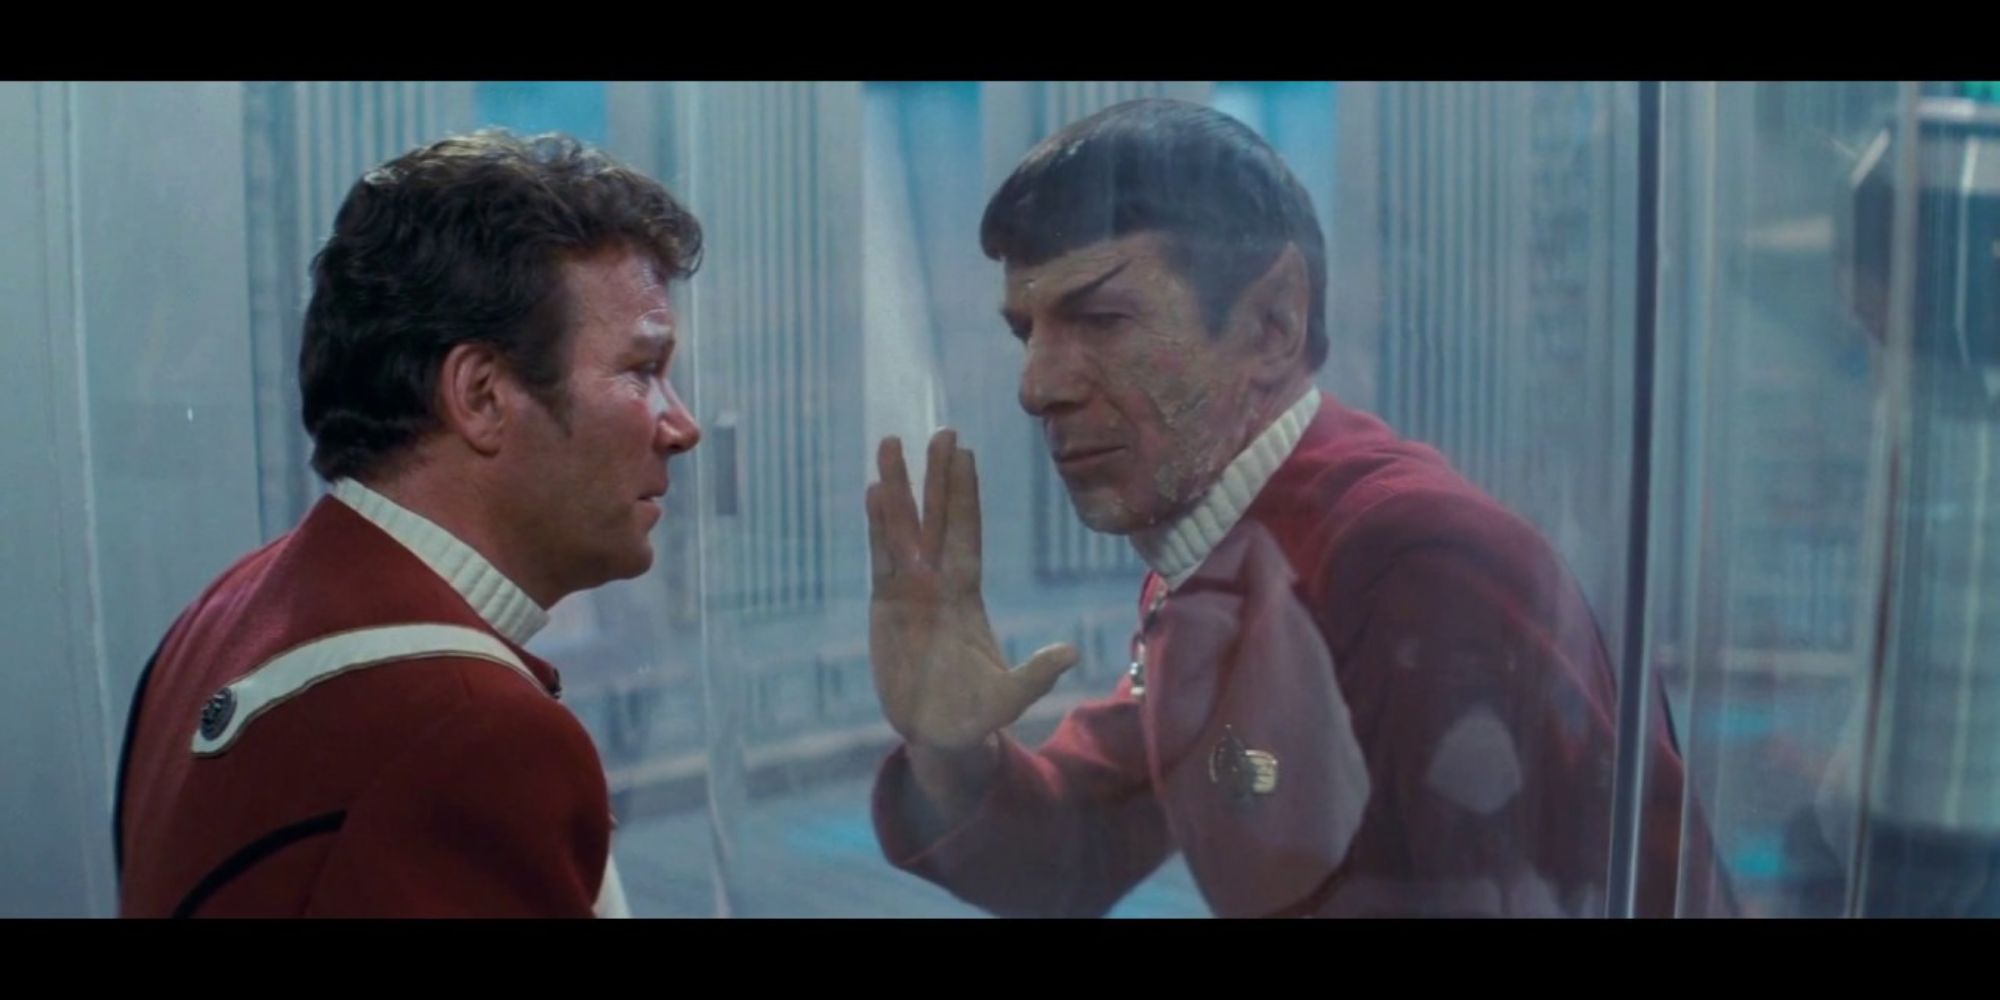 spock says farewell to kirk in star trek 2